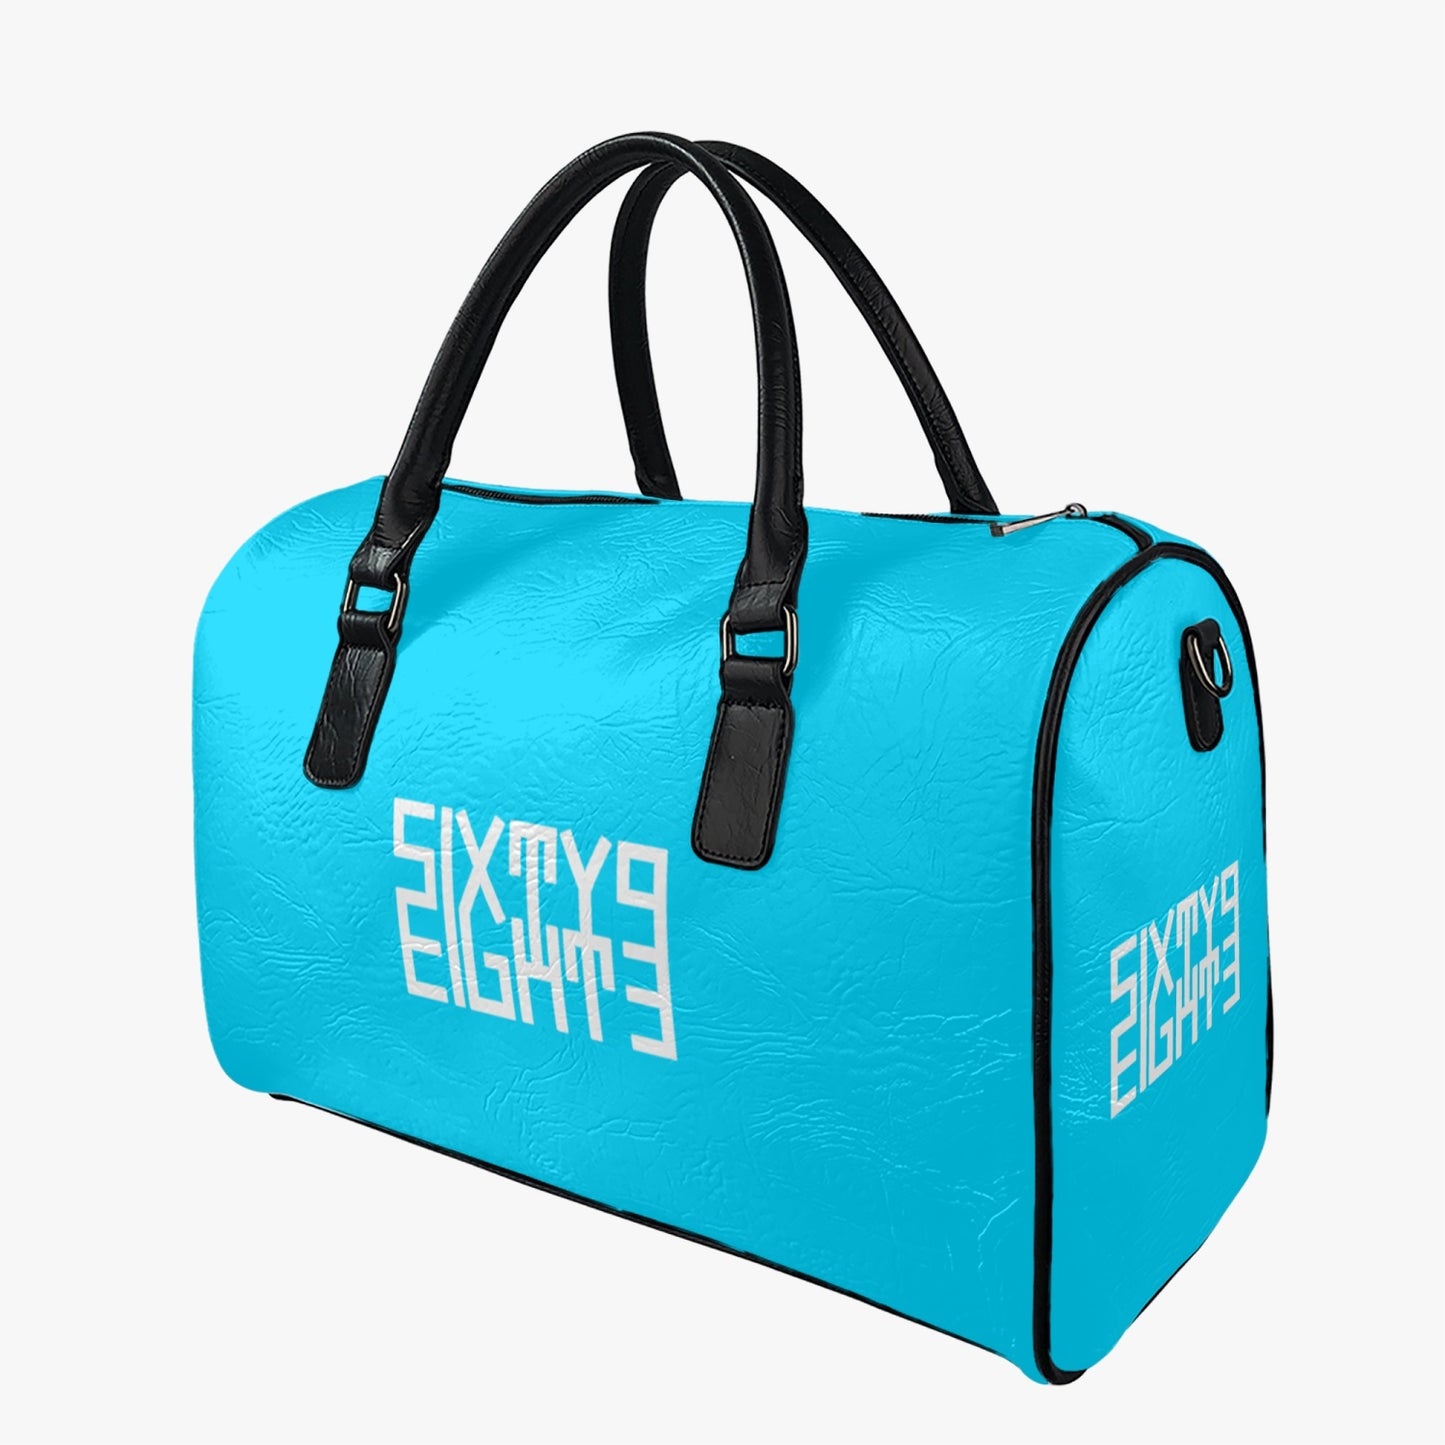 Sixty Eight 93 Logo White Aqua Blue Leather Portable Travel Bag